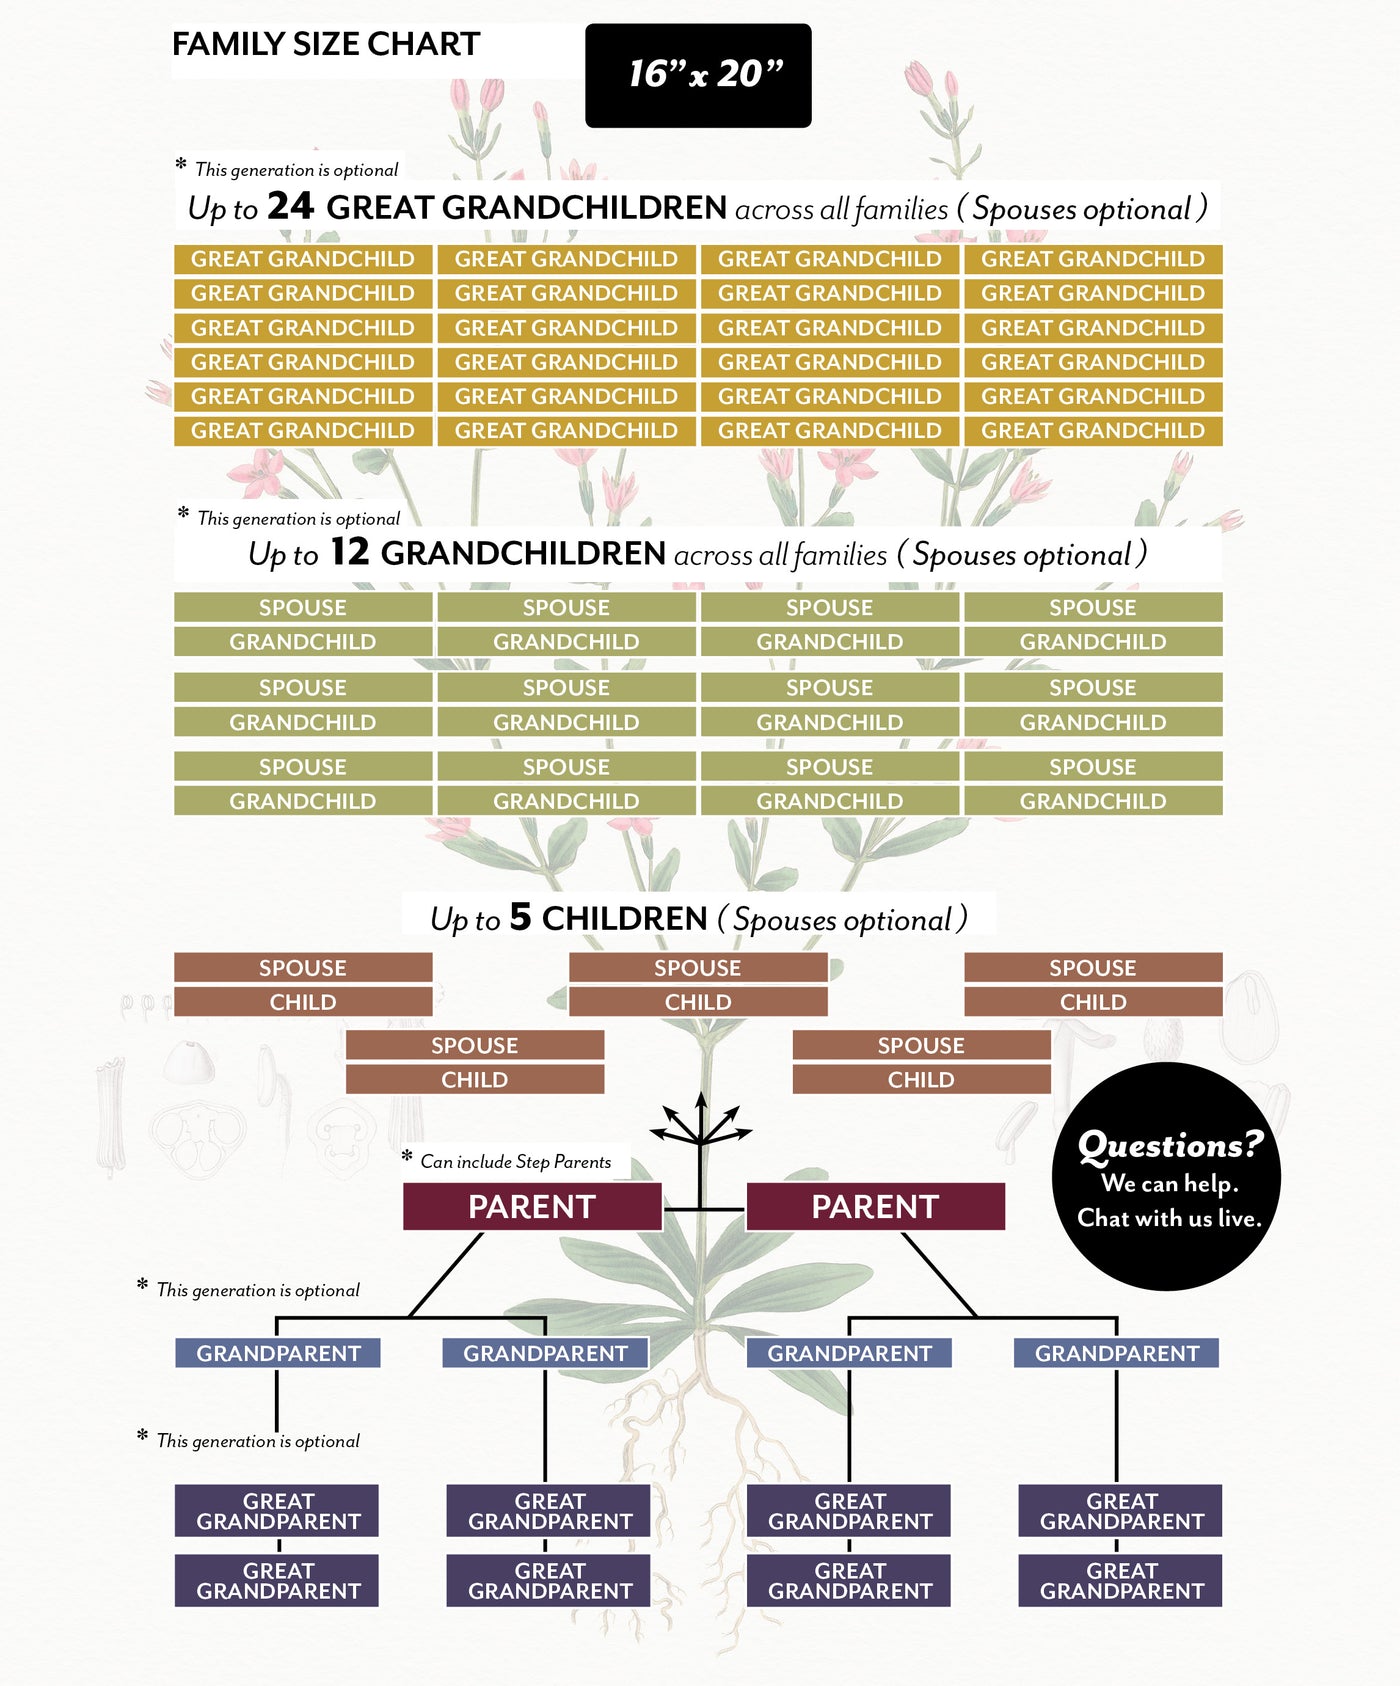 Family Size Chart for Centaurim Family Botanic  16 x 20 print size